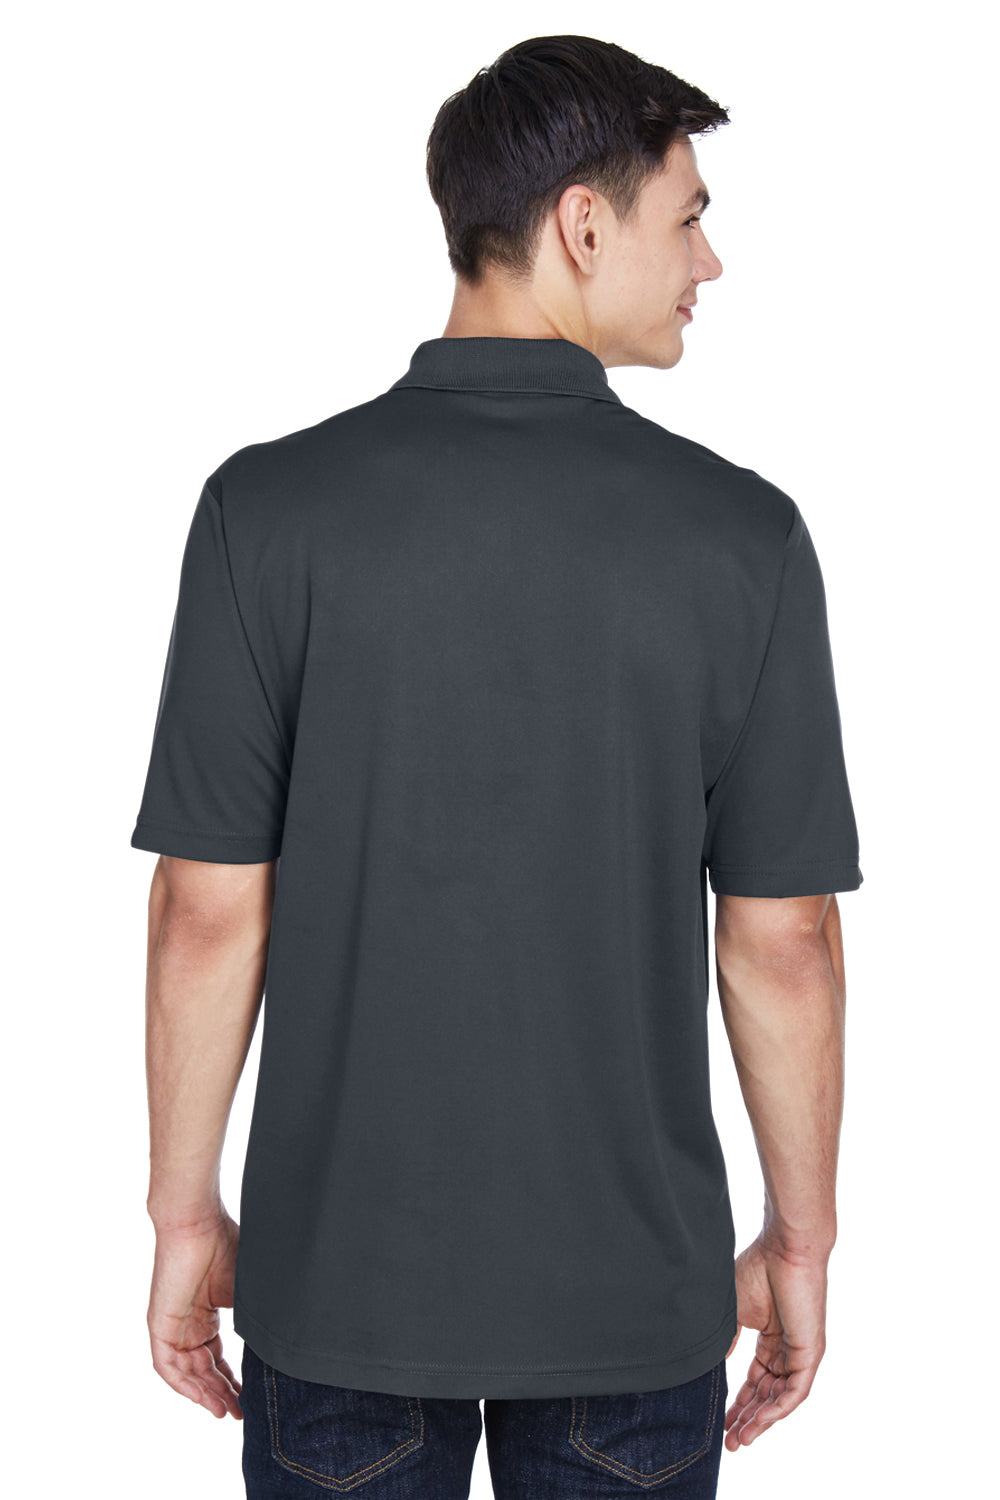 Core 365 CE101 Mens Balance Performance Moisture Wicking Short Sleeve Polo Shirt Forest Green/Grey Back